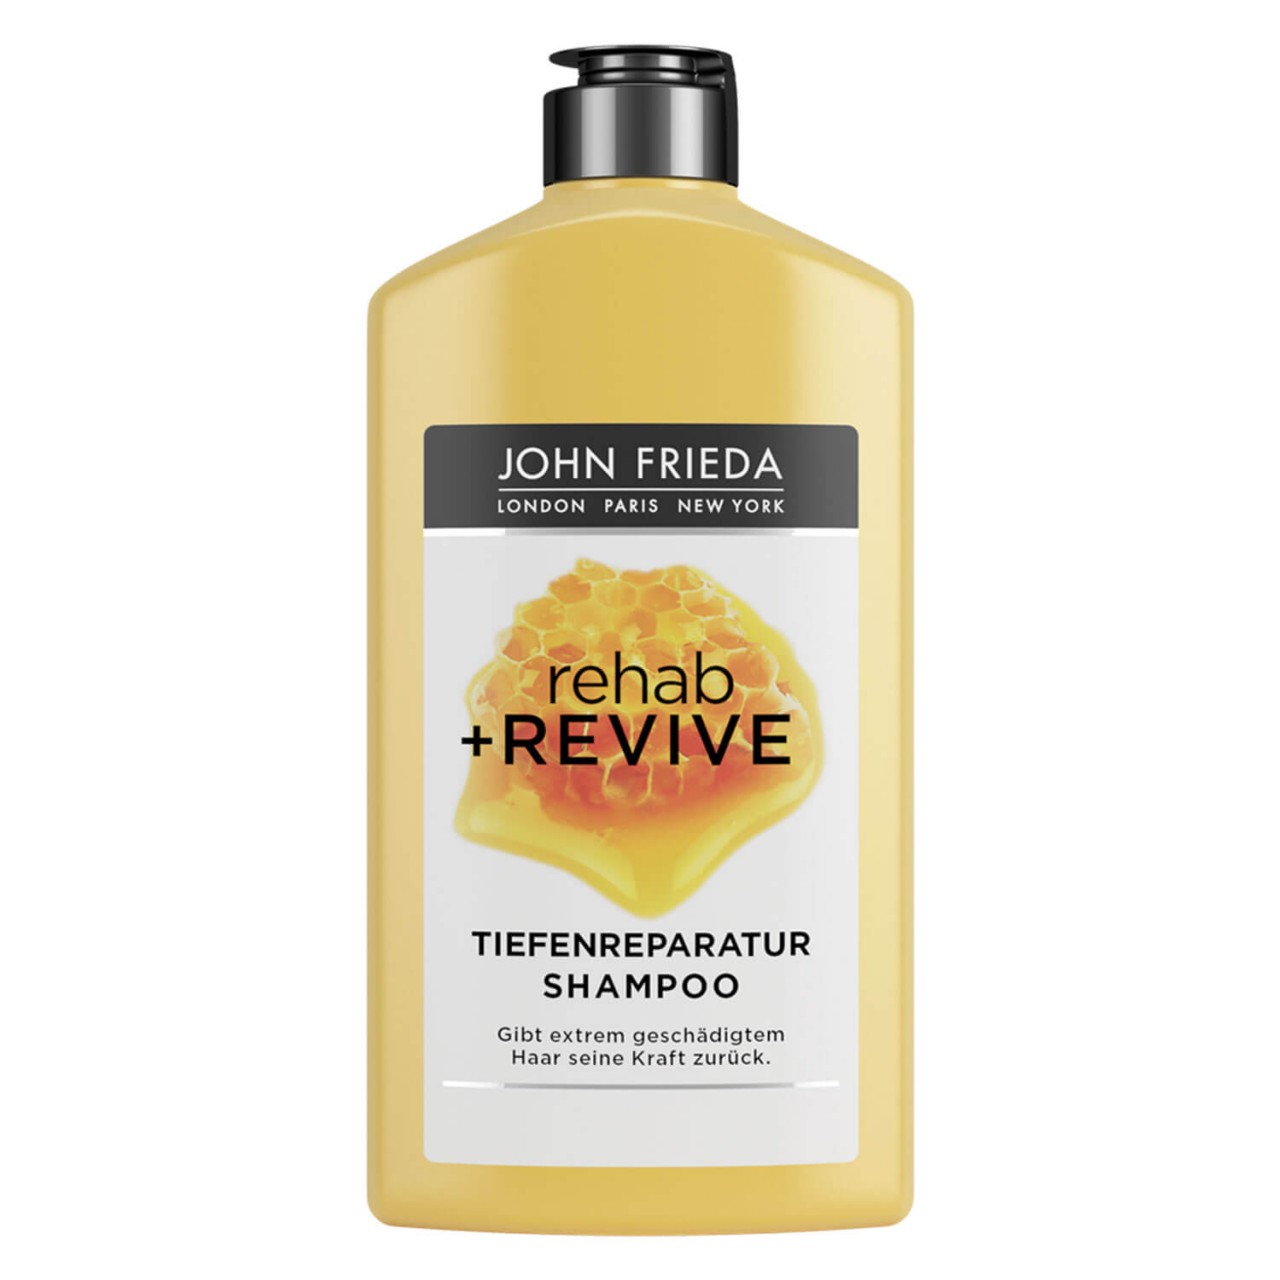 Rehab + Revive - Tiefenreparatur Shampoo von John Frieda